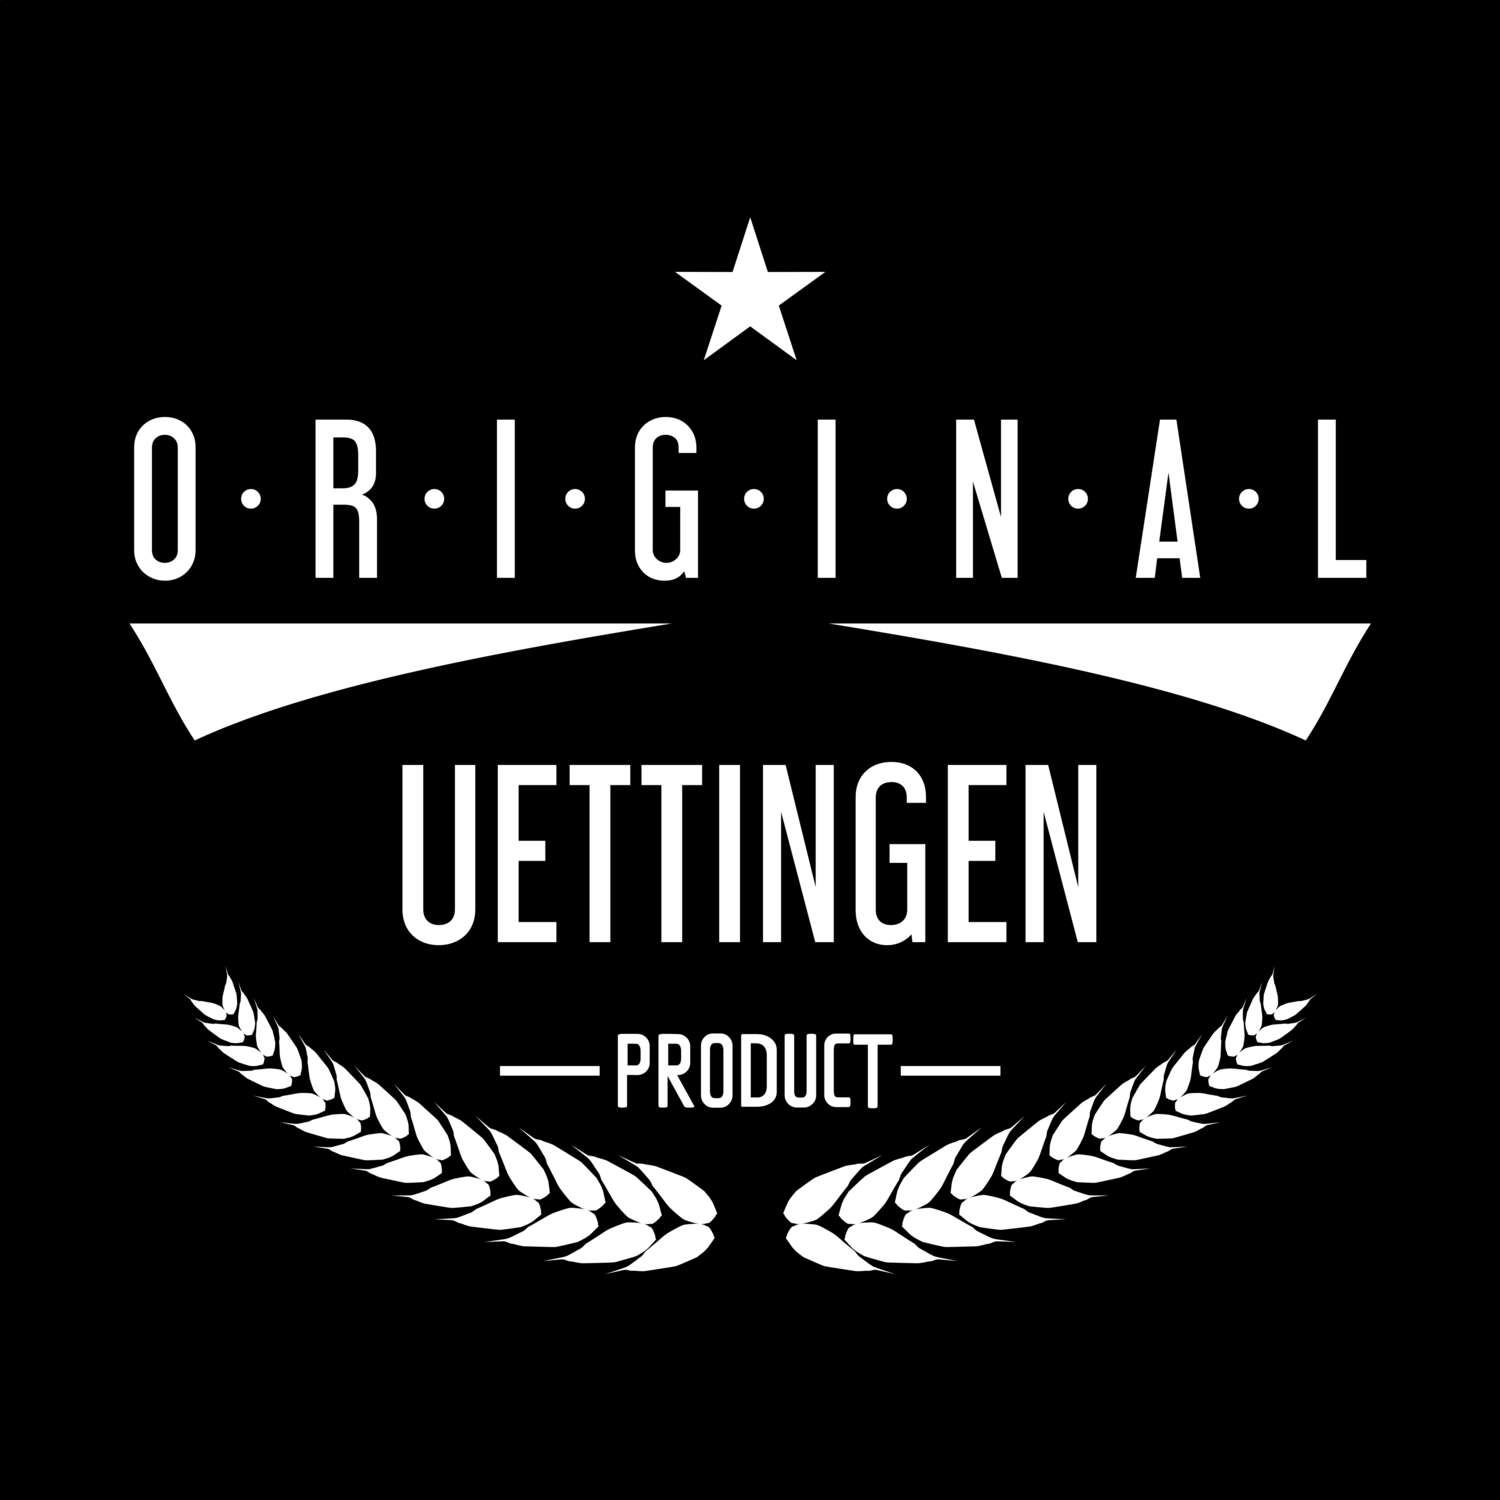 Uettingen T-Shirt »Original Product«